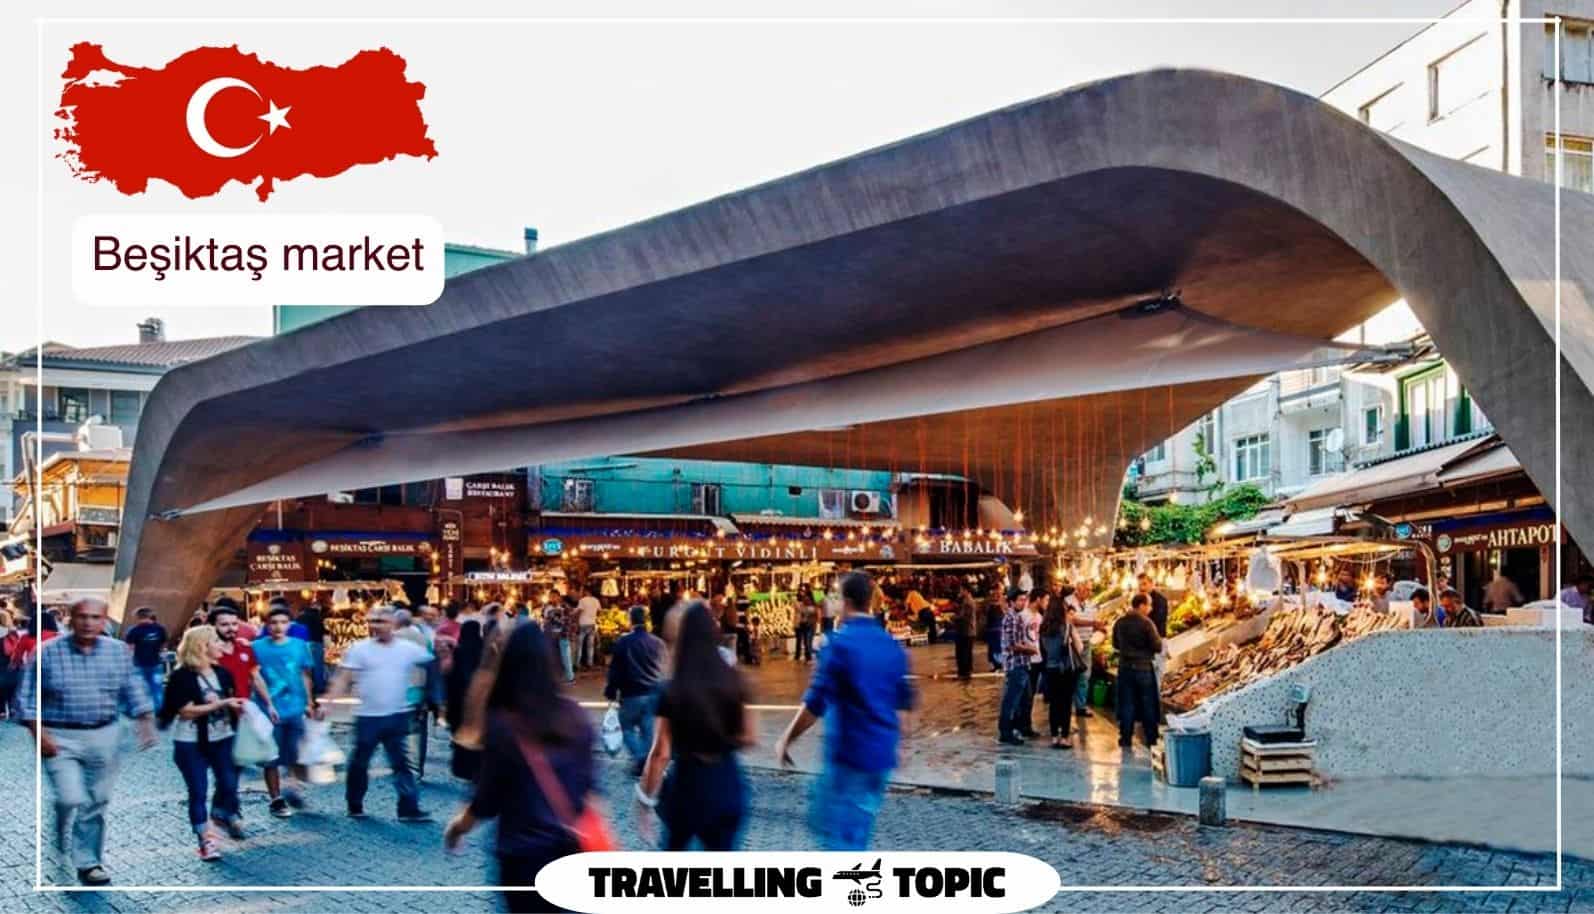 Beşiktaş market